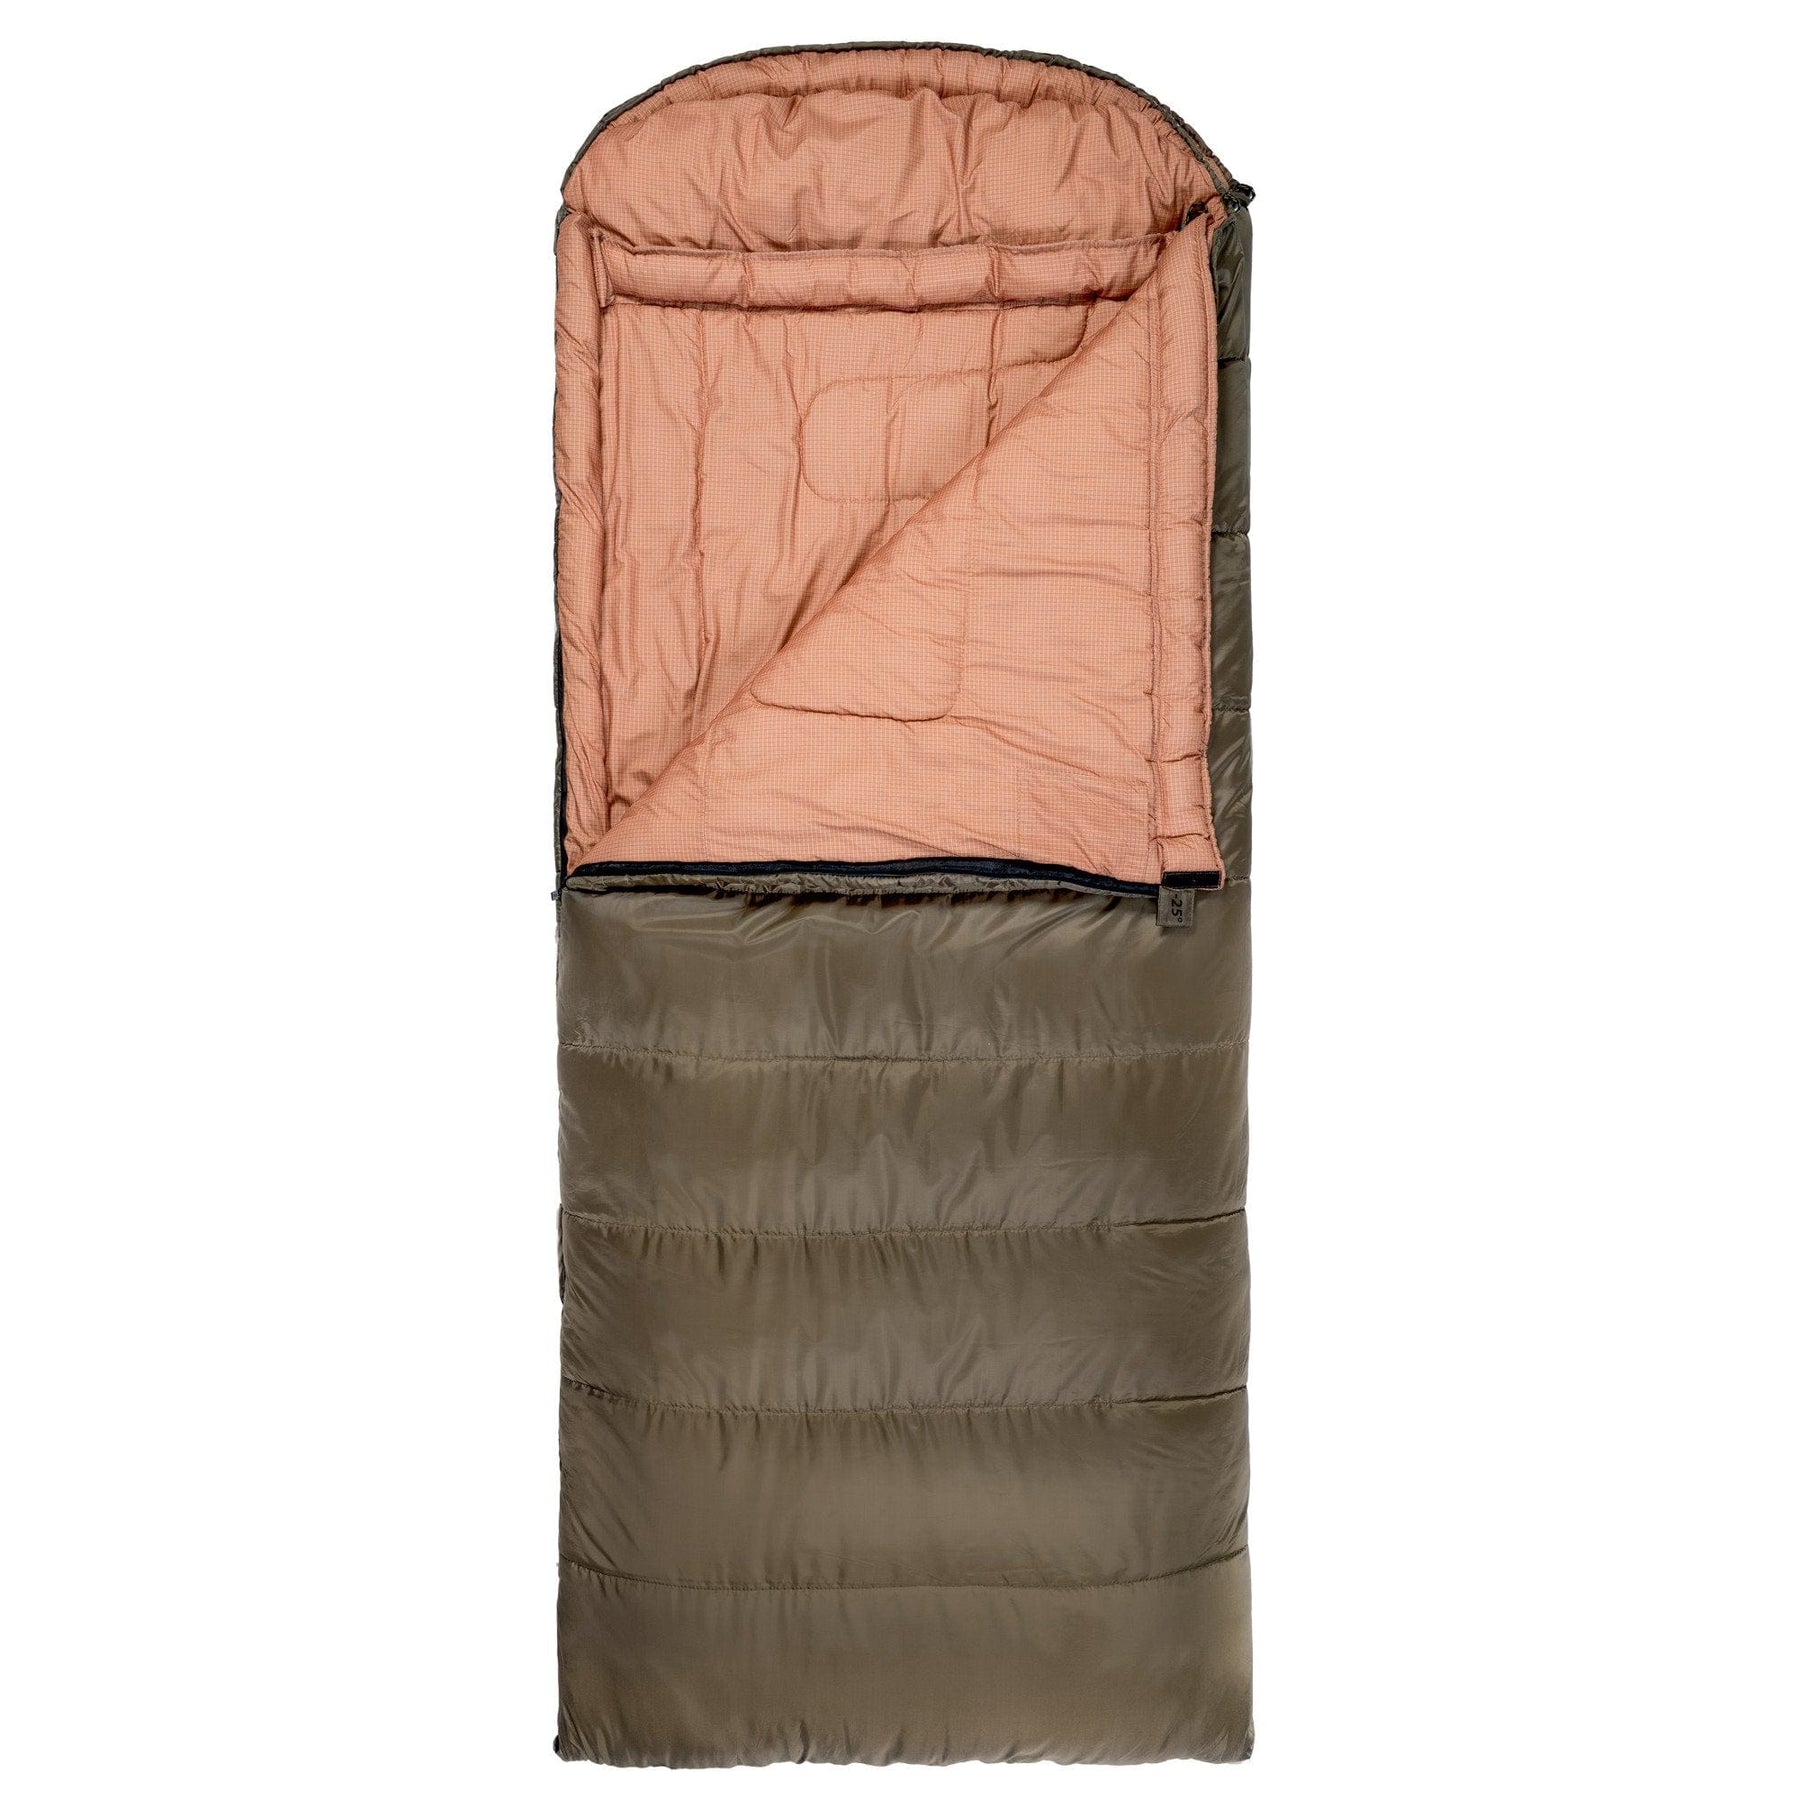 TETON Sports Celsius XL 0˚F Sleeping Bag Right Zipper / Green 115R